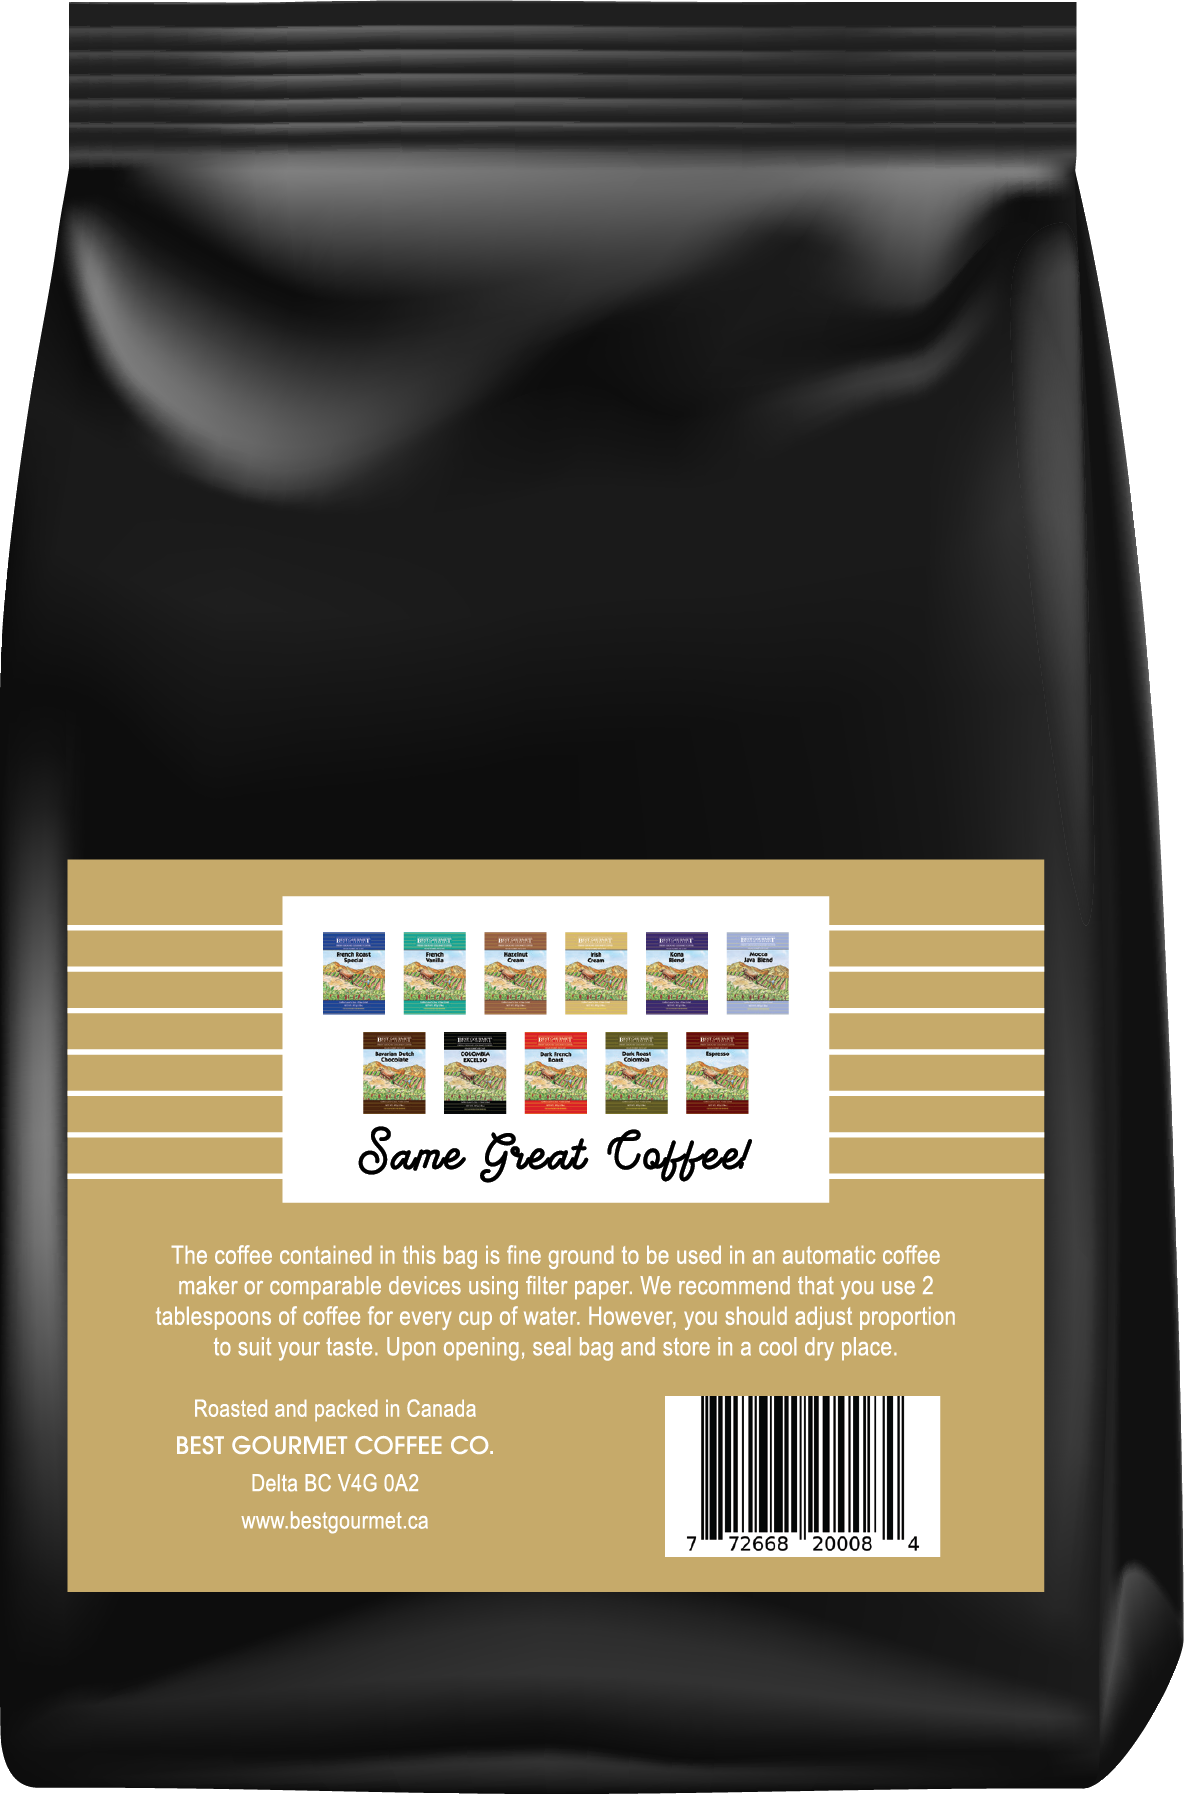 Irish Cream Coffee -2lb-907g Ground Coffee - Drip Grind - Medium Roast